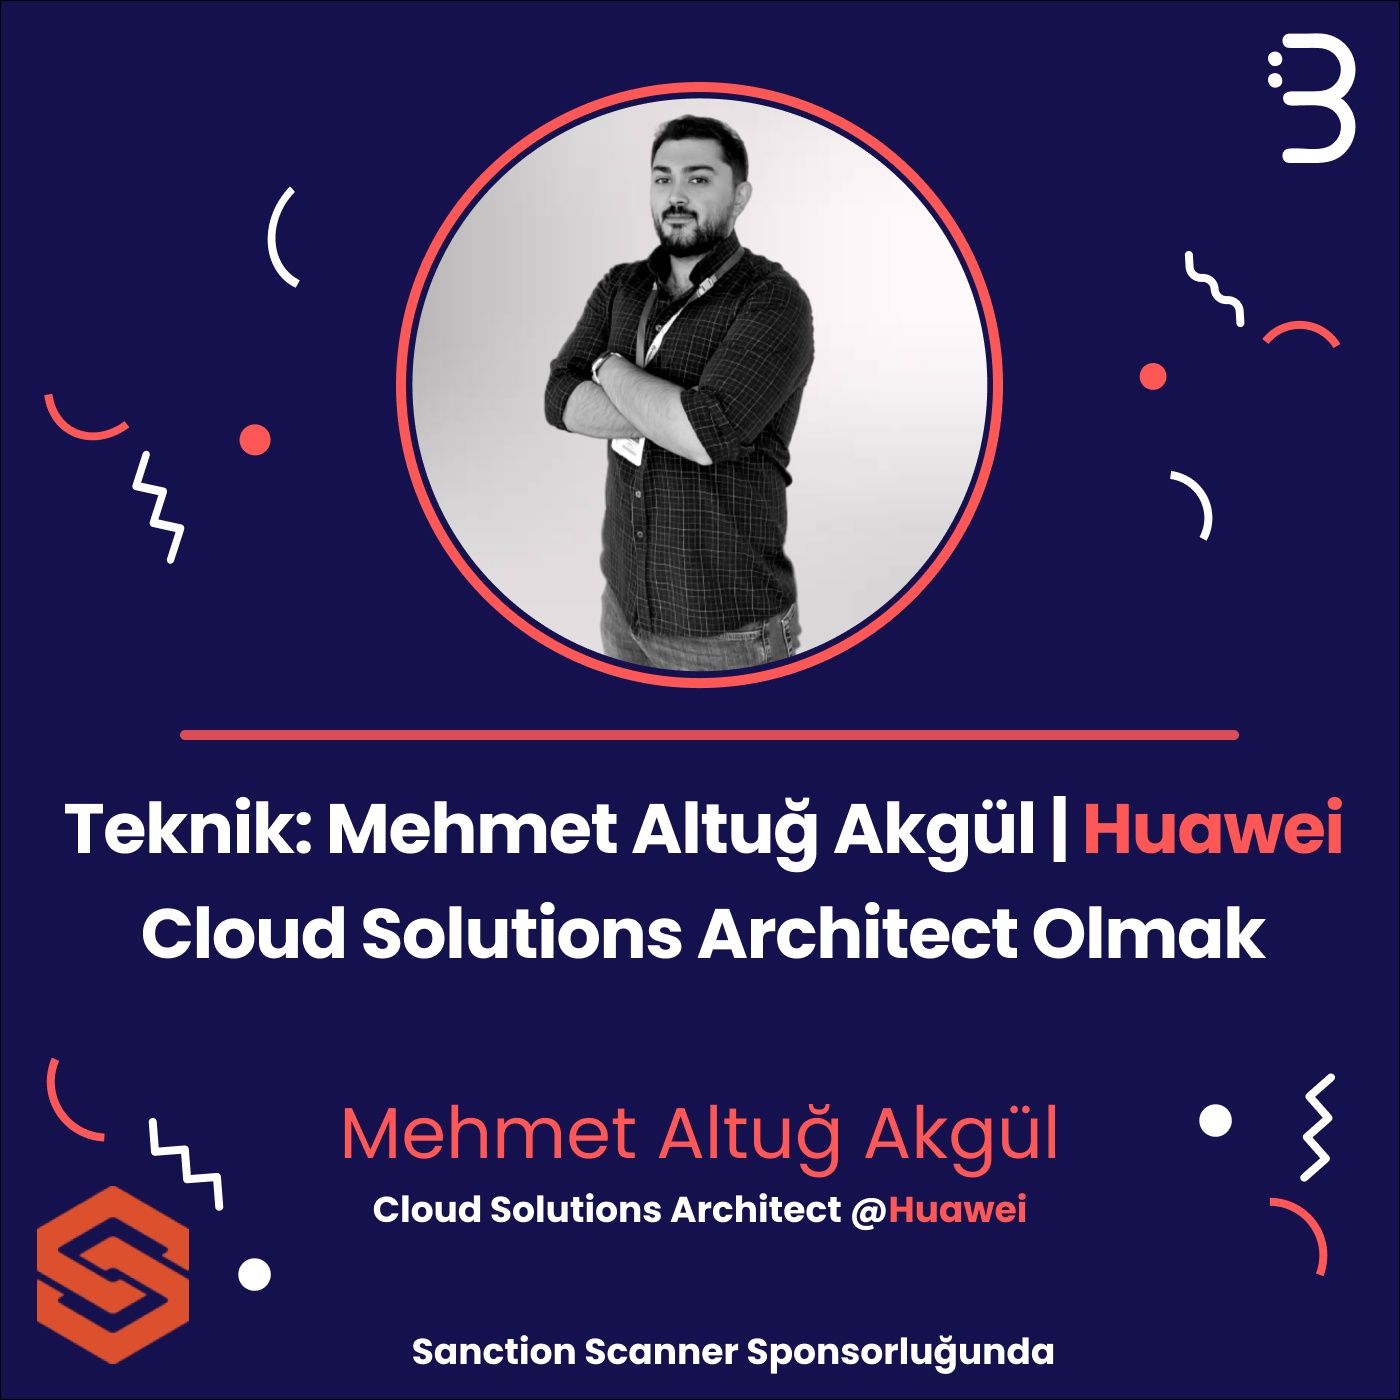 Teknik: Mehmet Altuğ Akgül | Huawei - Cloud Solutions Architect Olmak